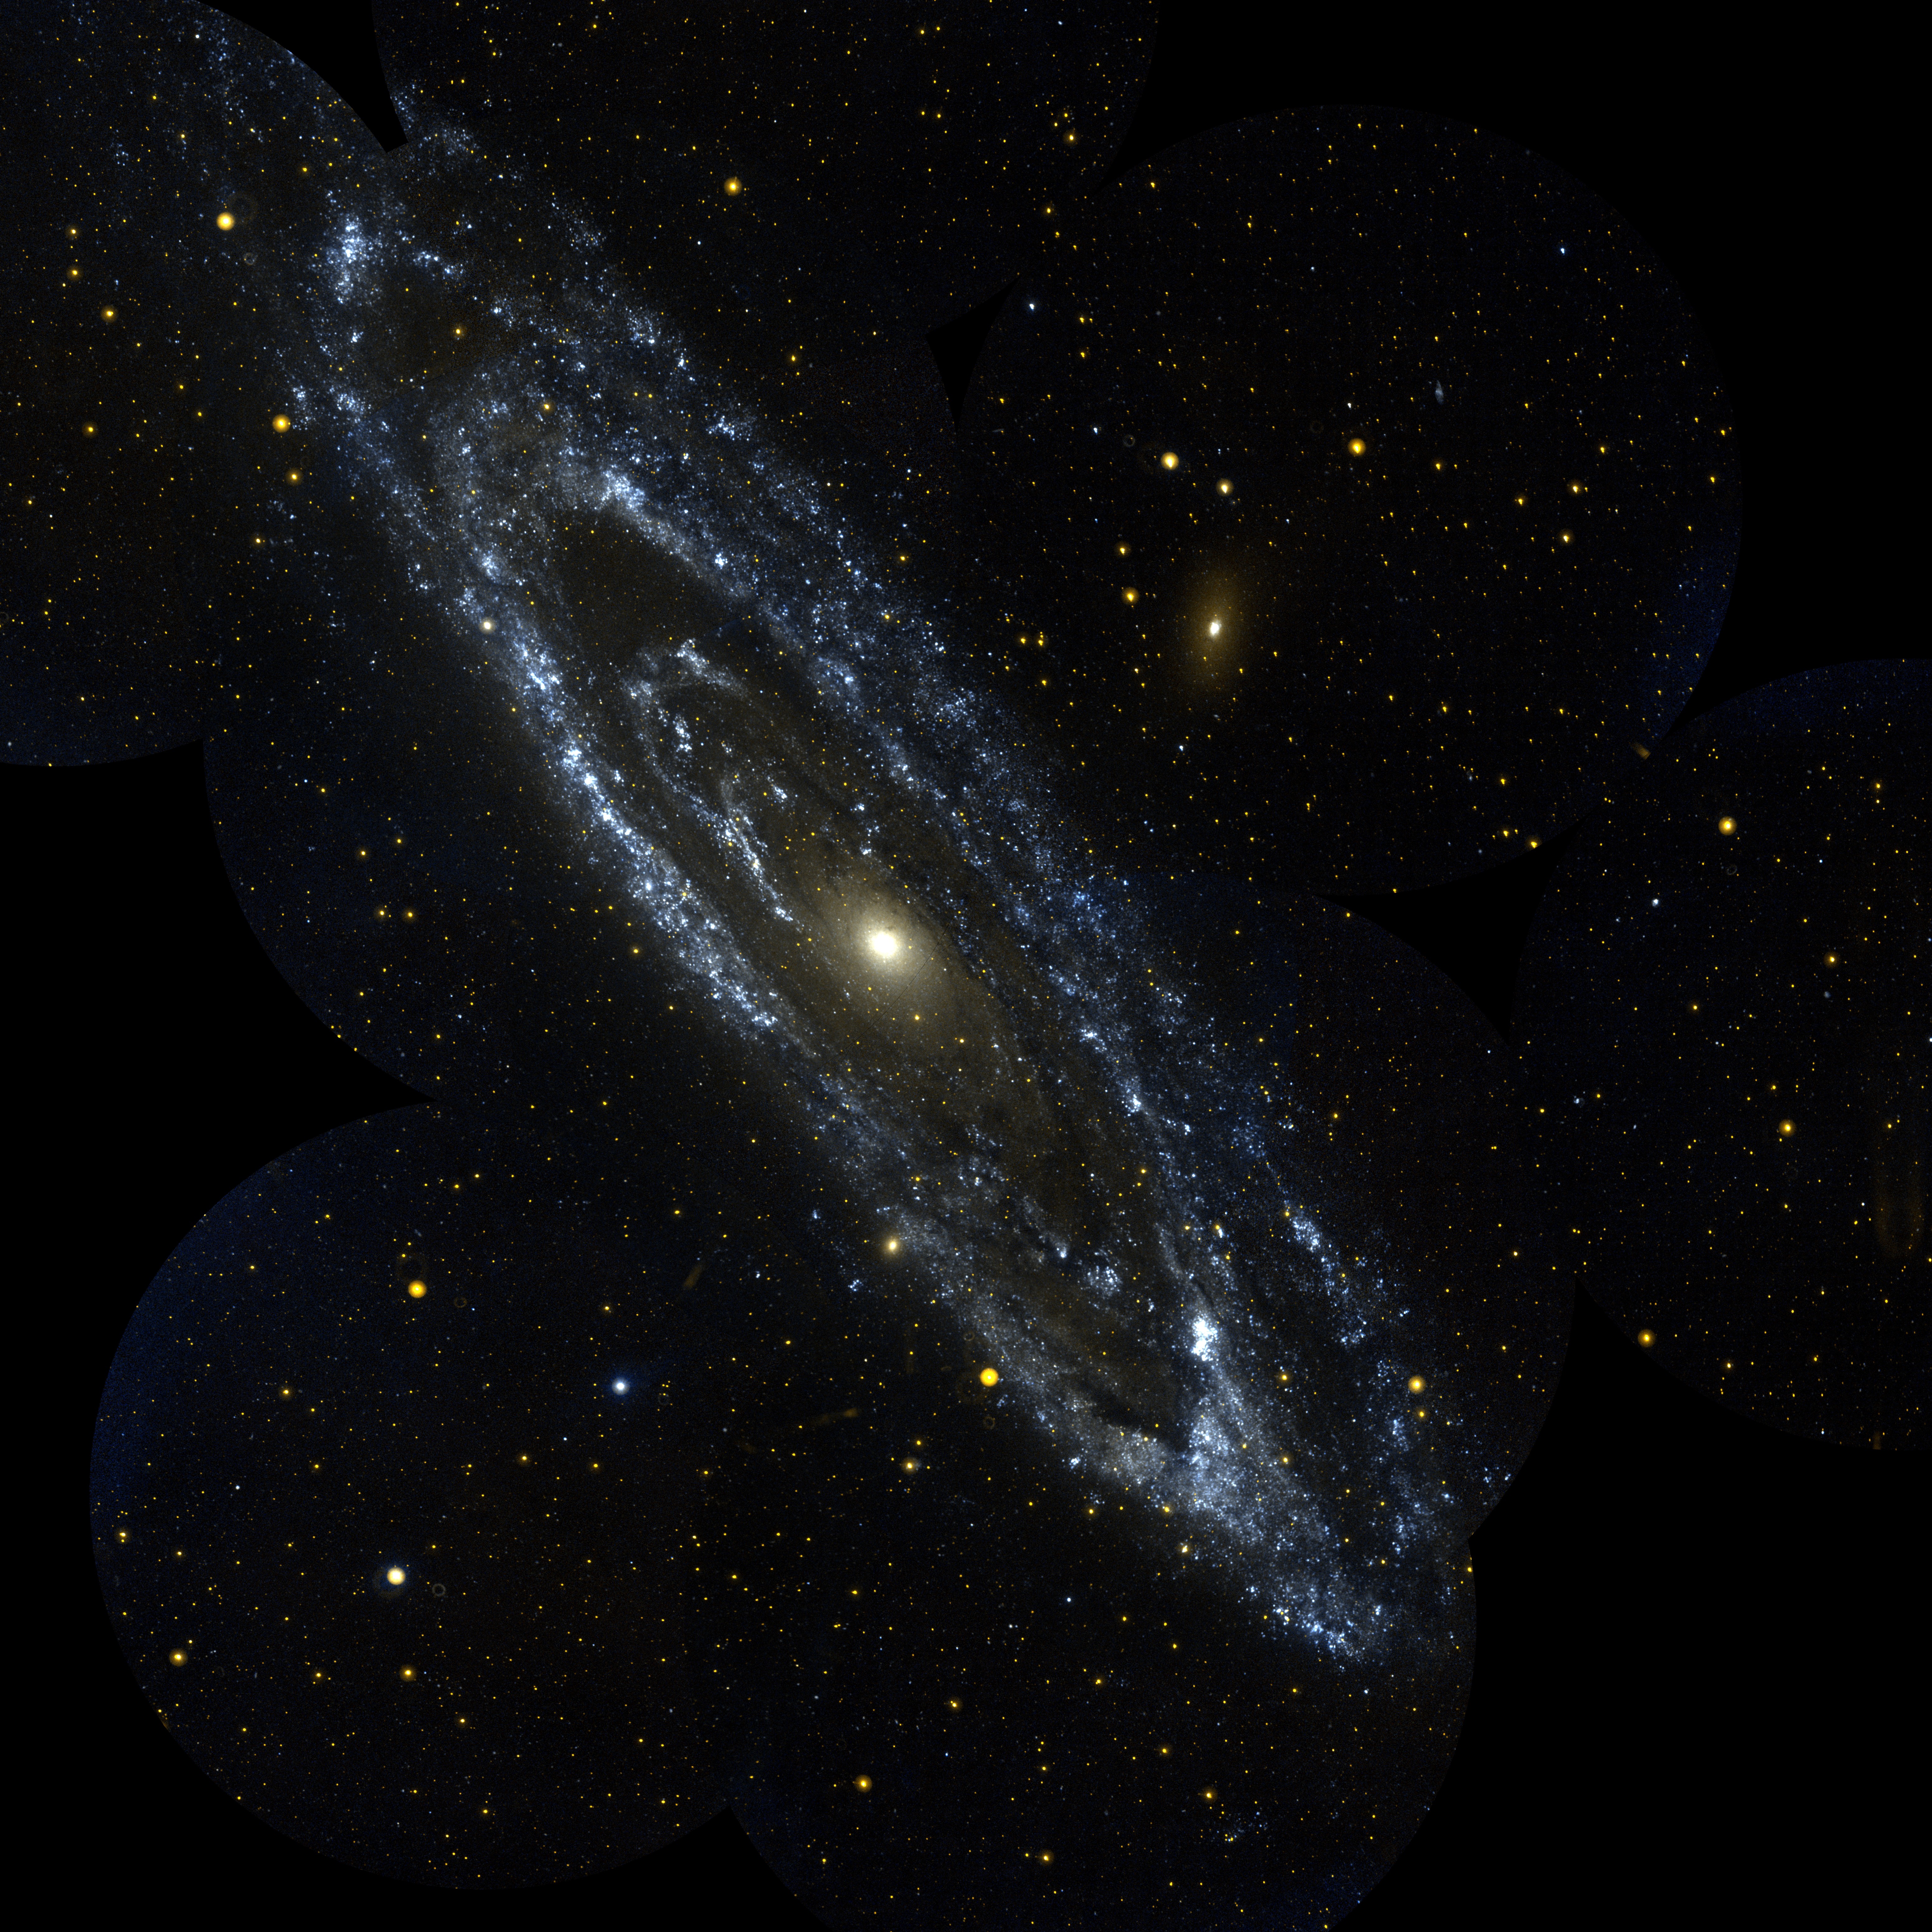 http://upload.wikimedia.org/wikipedia/commons/f/ff/Andromeda_galaxy.jpg